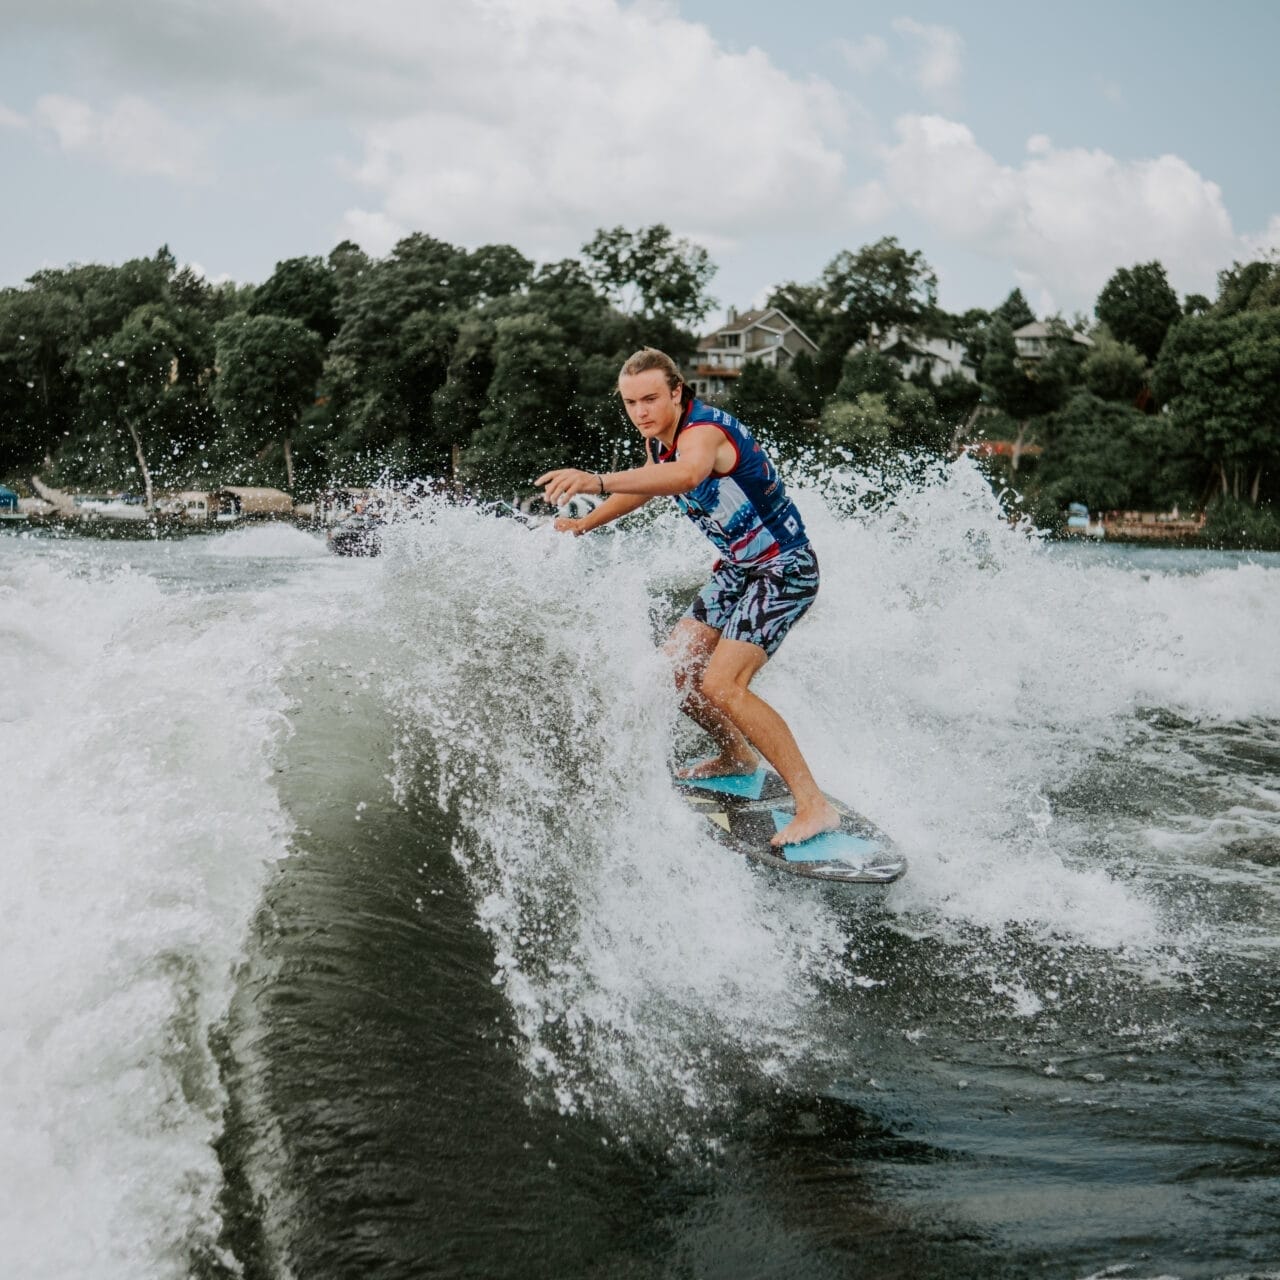 Cade Lybeck riding a wave on a surfboard.